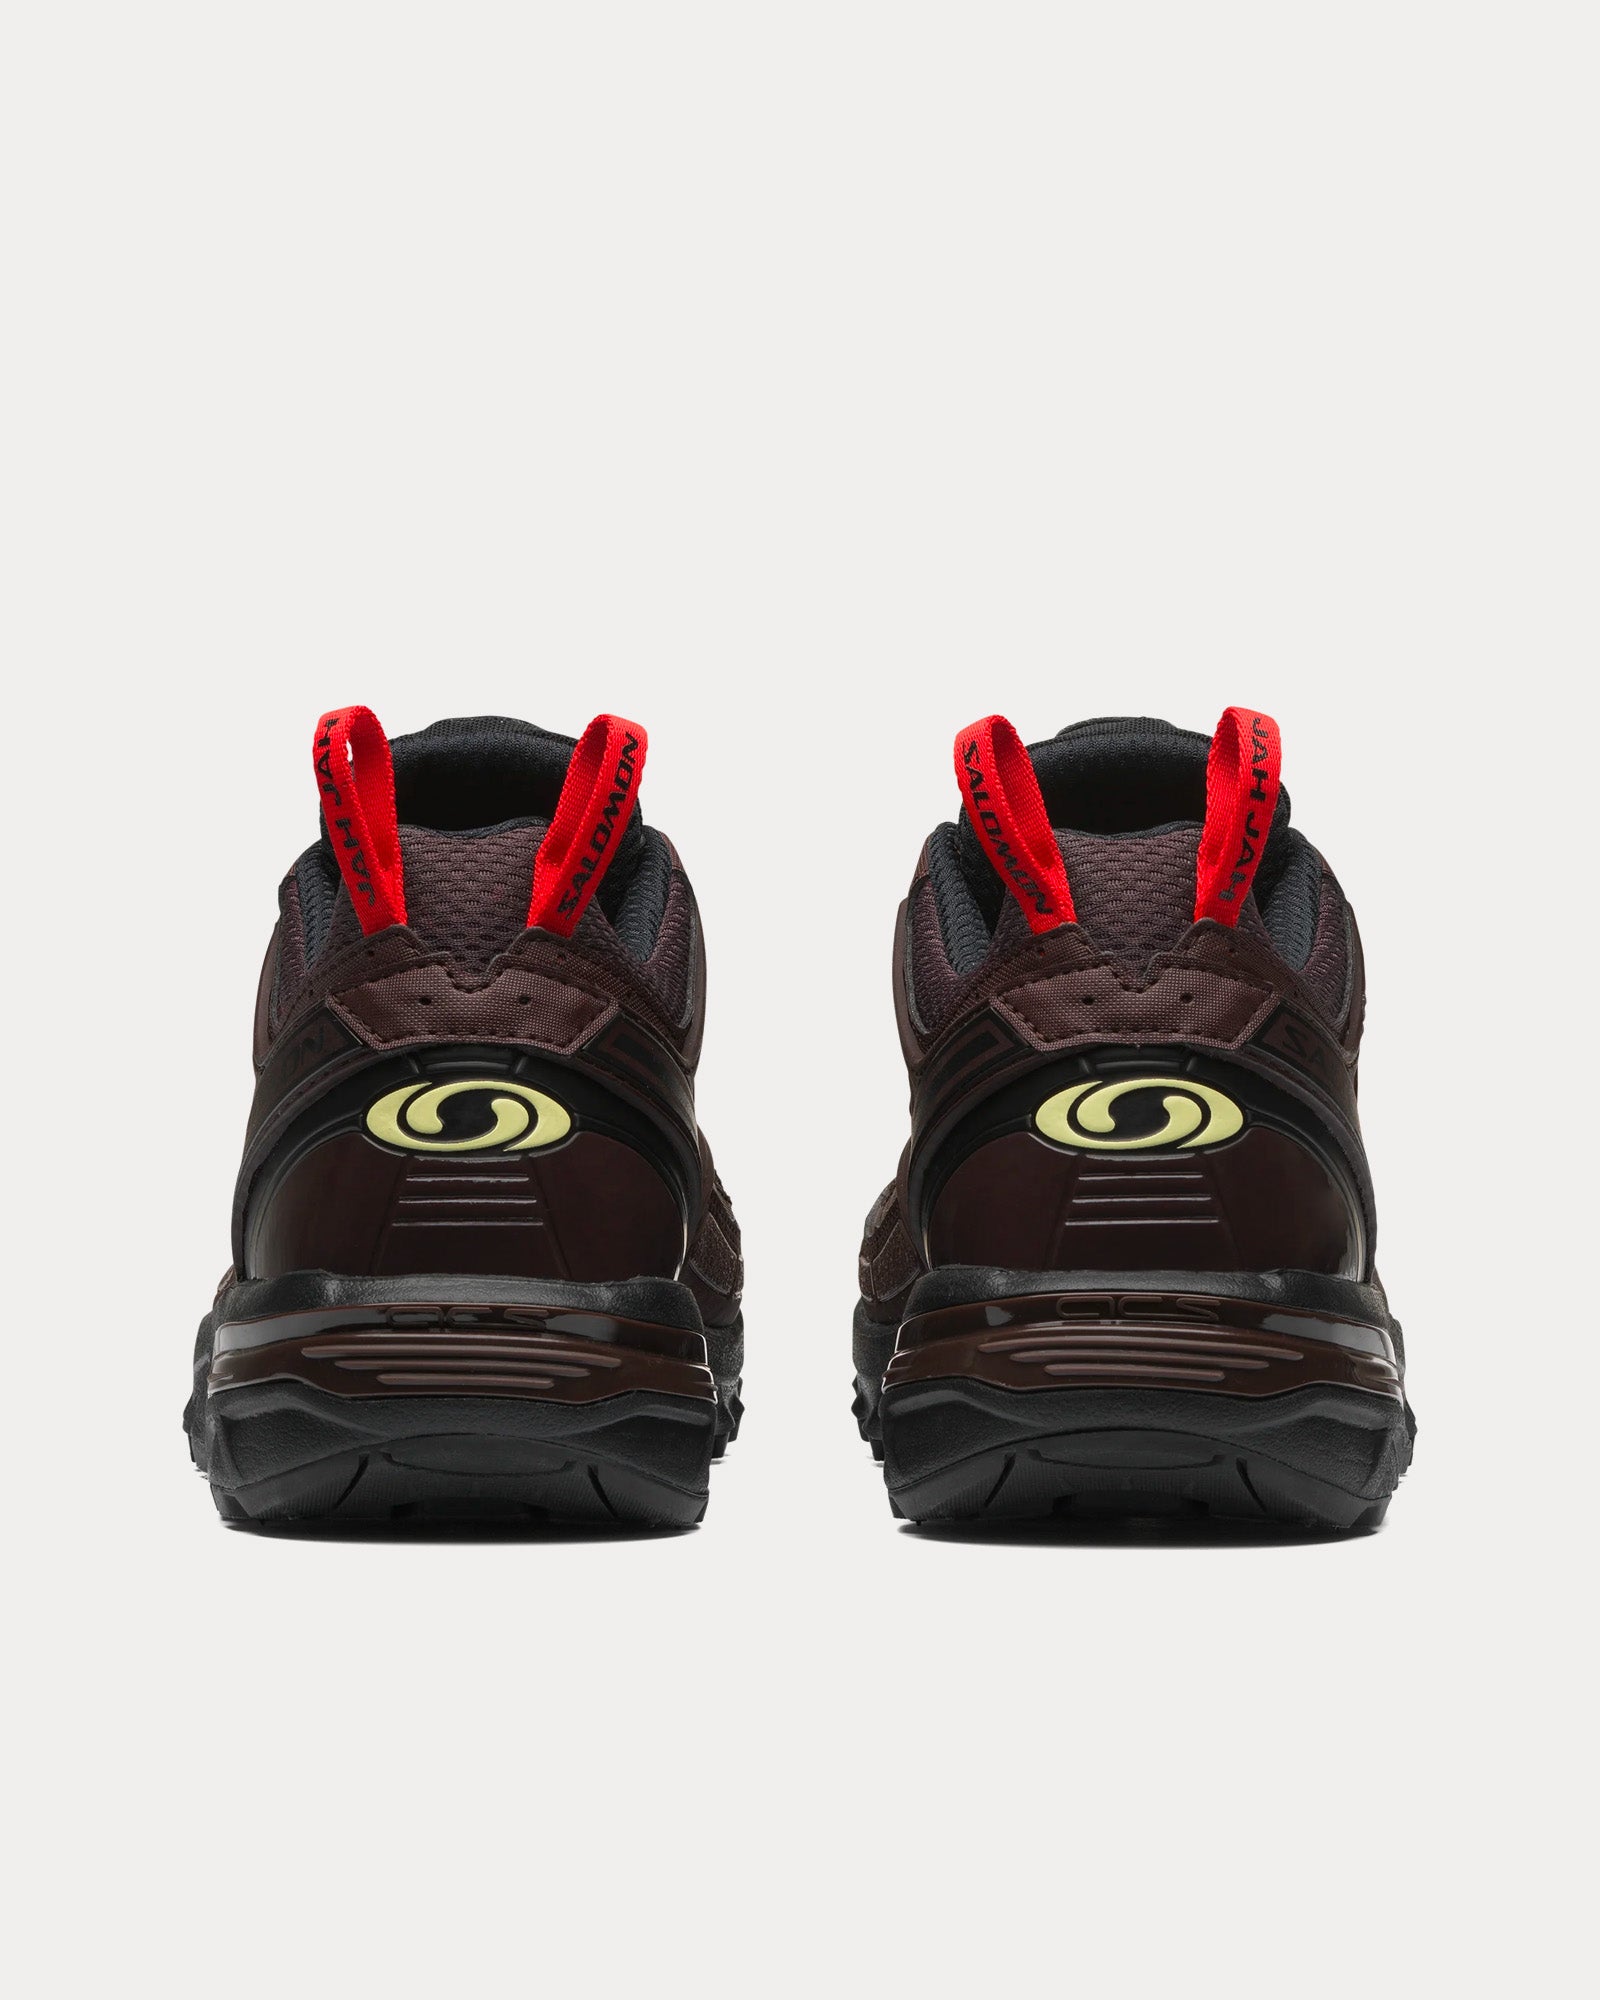 Salomon x Jah Jah - ACS Pro Black / Chocolate Plum / High Risk Red Low Top Sneakers